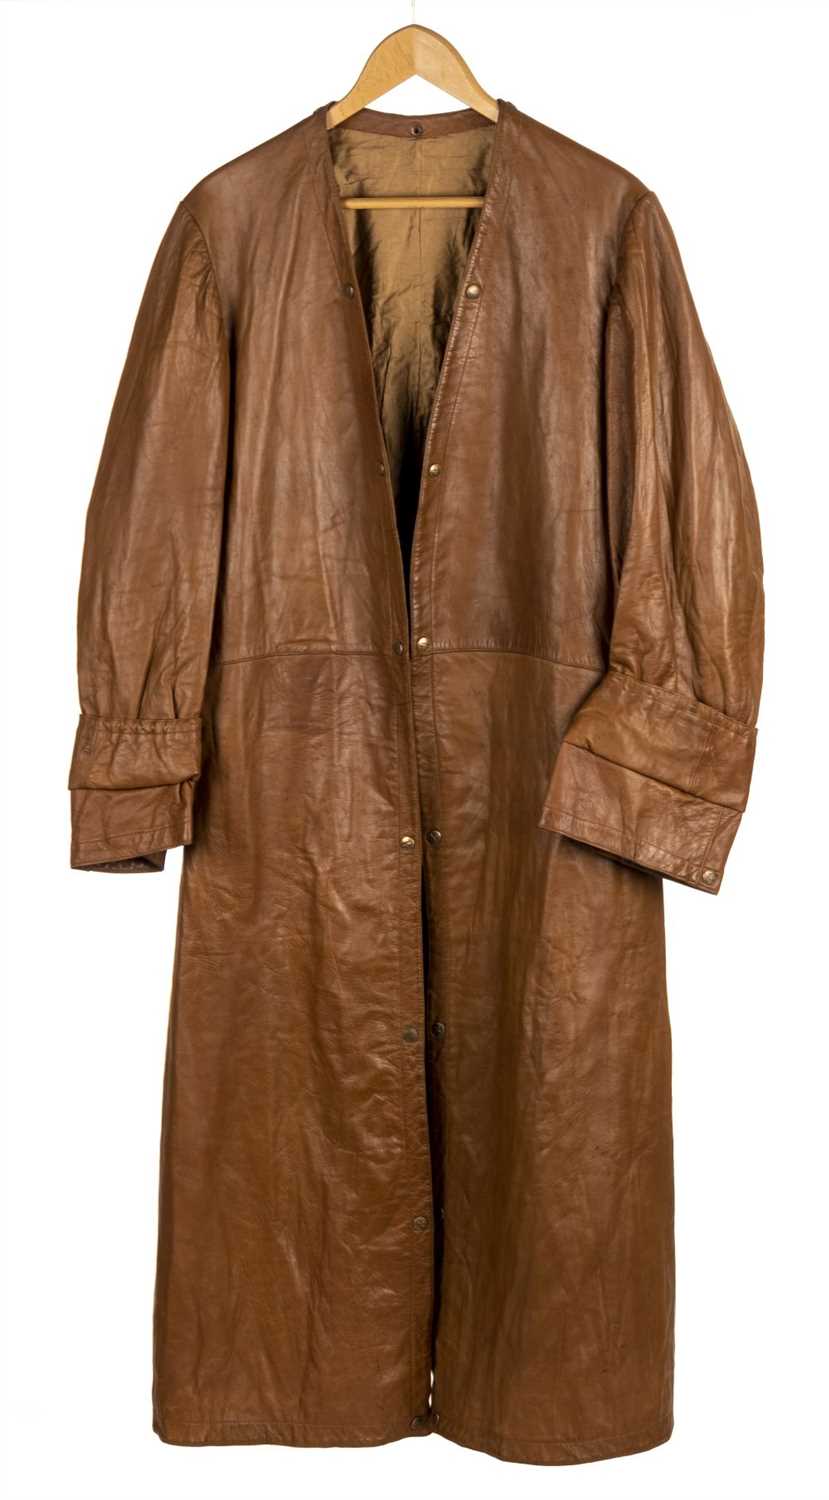 Lot 53 - Brackley (Herbert, 1894-1948). An Interwar leather flying coat worn by Air Commodore Brackley